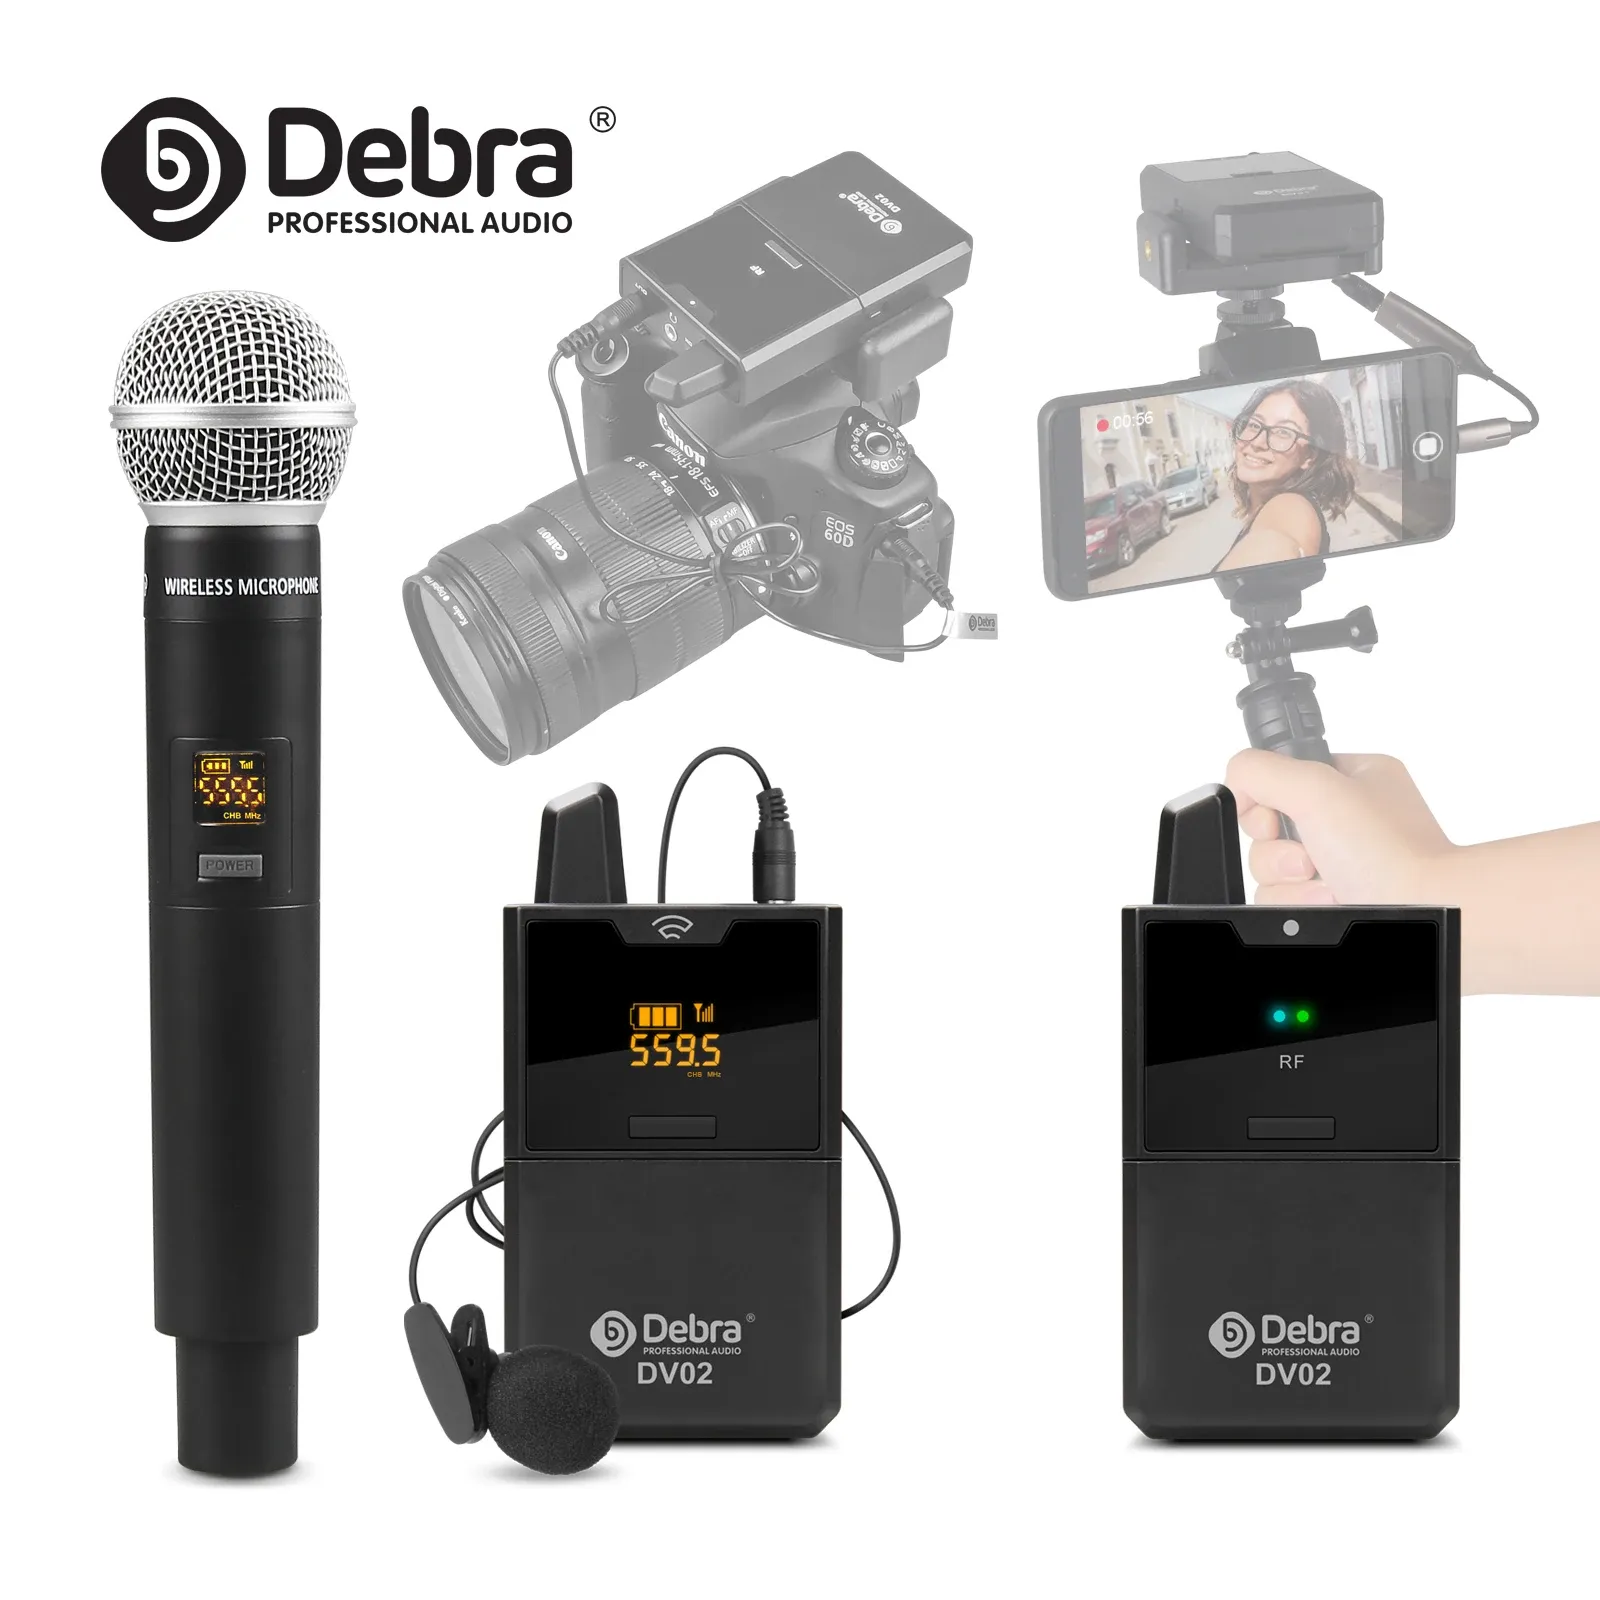 Microphones Debra DV UHF Wireless Lavalier / Handheld Microphone With Audio Monitor 50m pour les téléphones DSLR Cameras Recording Interview